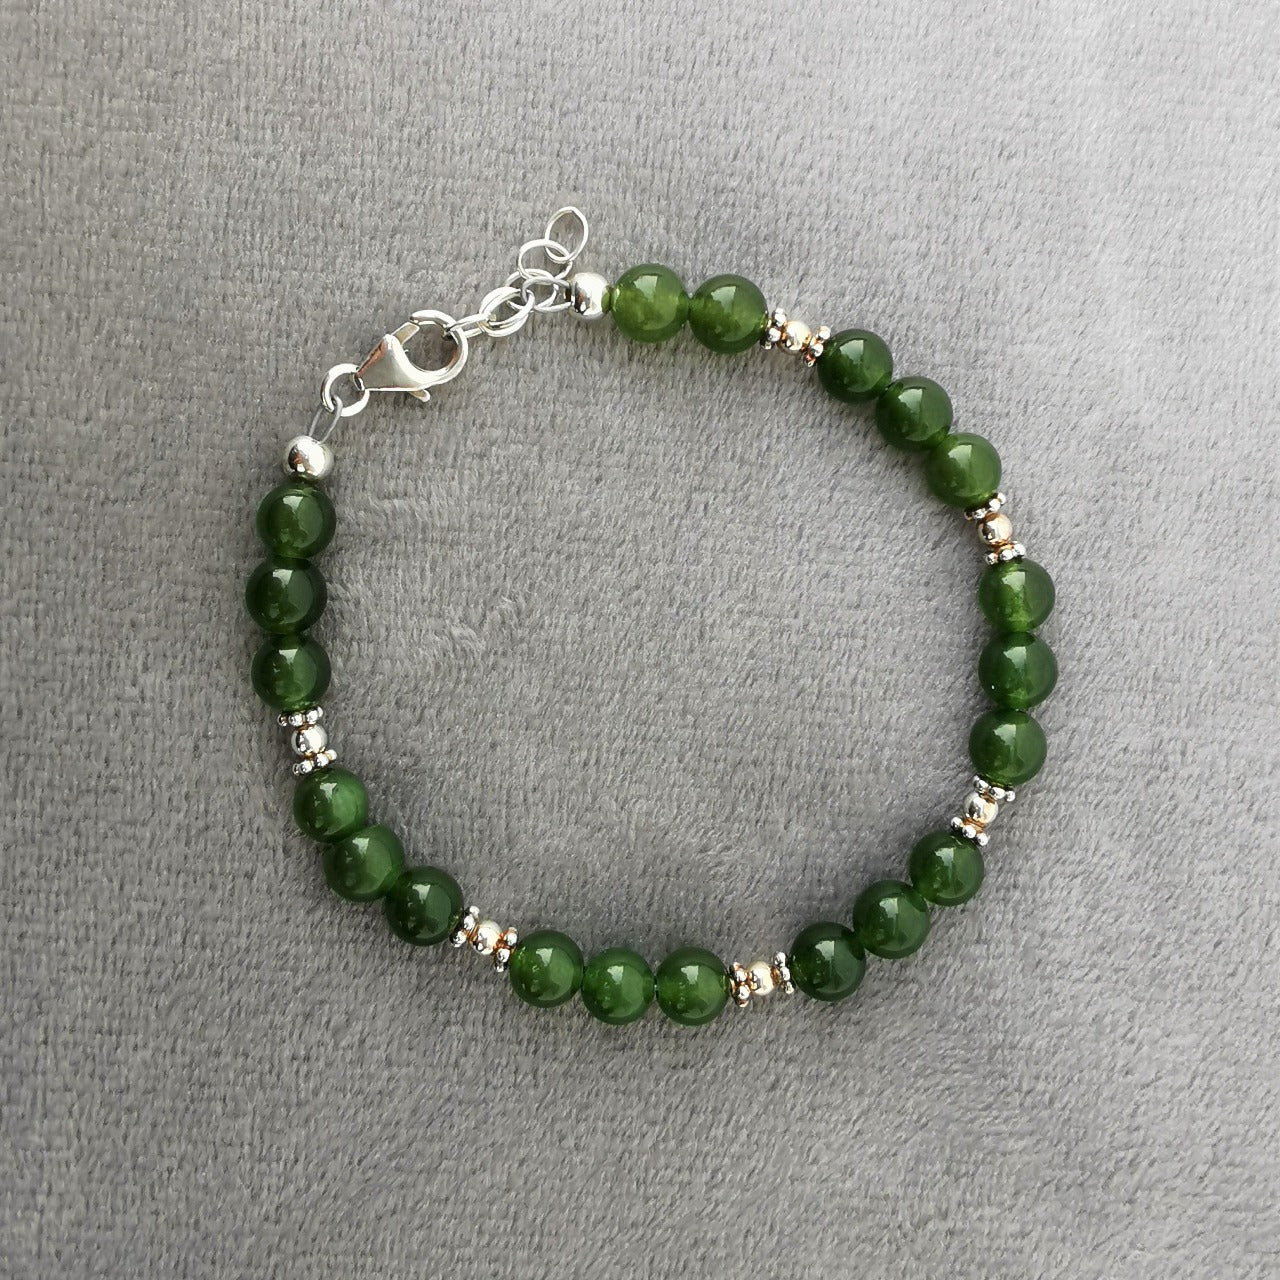 Jade krystall steinarmbånd - Jade Crystal Gemstone Bracelet